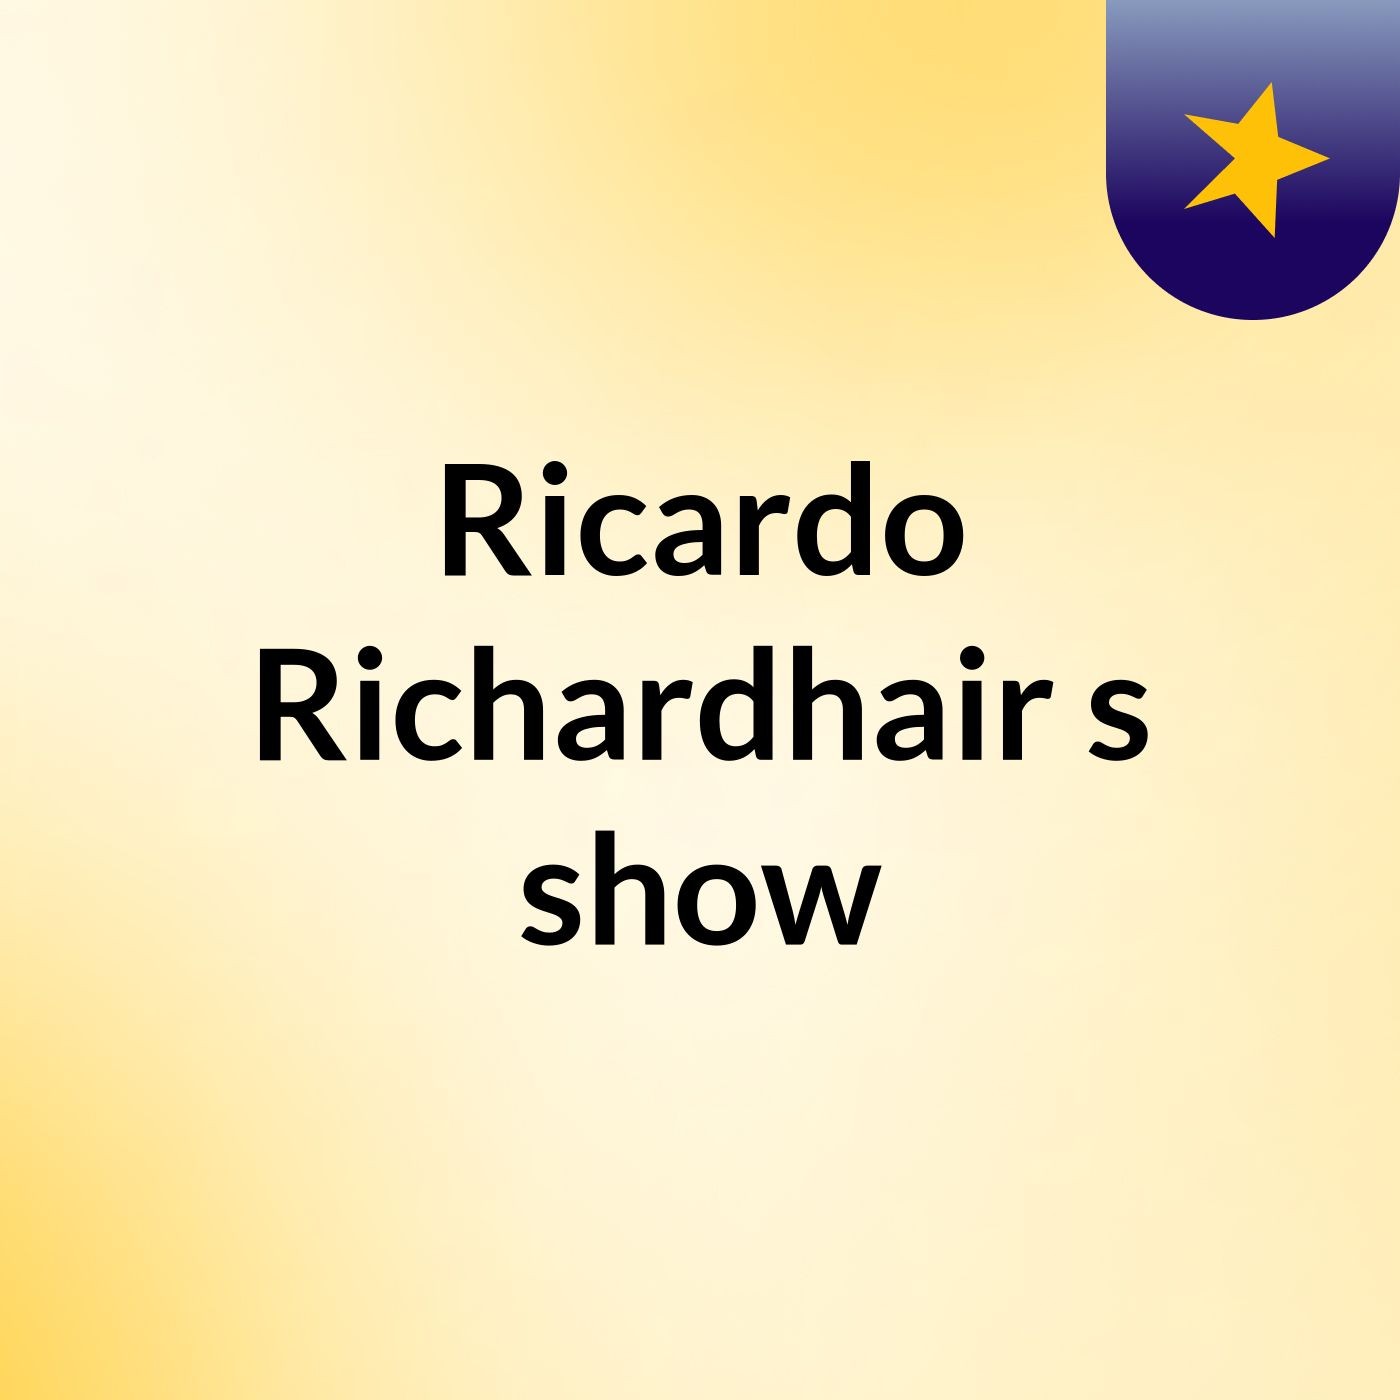 Ricardo Richardhair's show